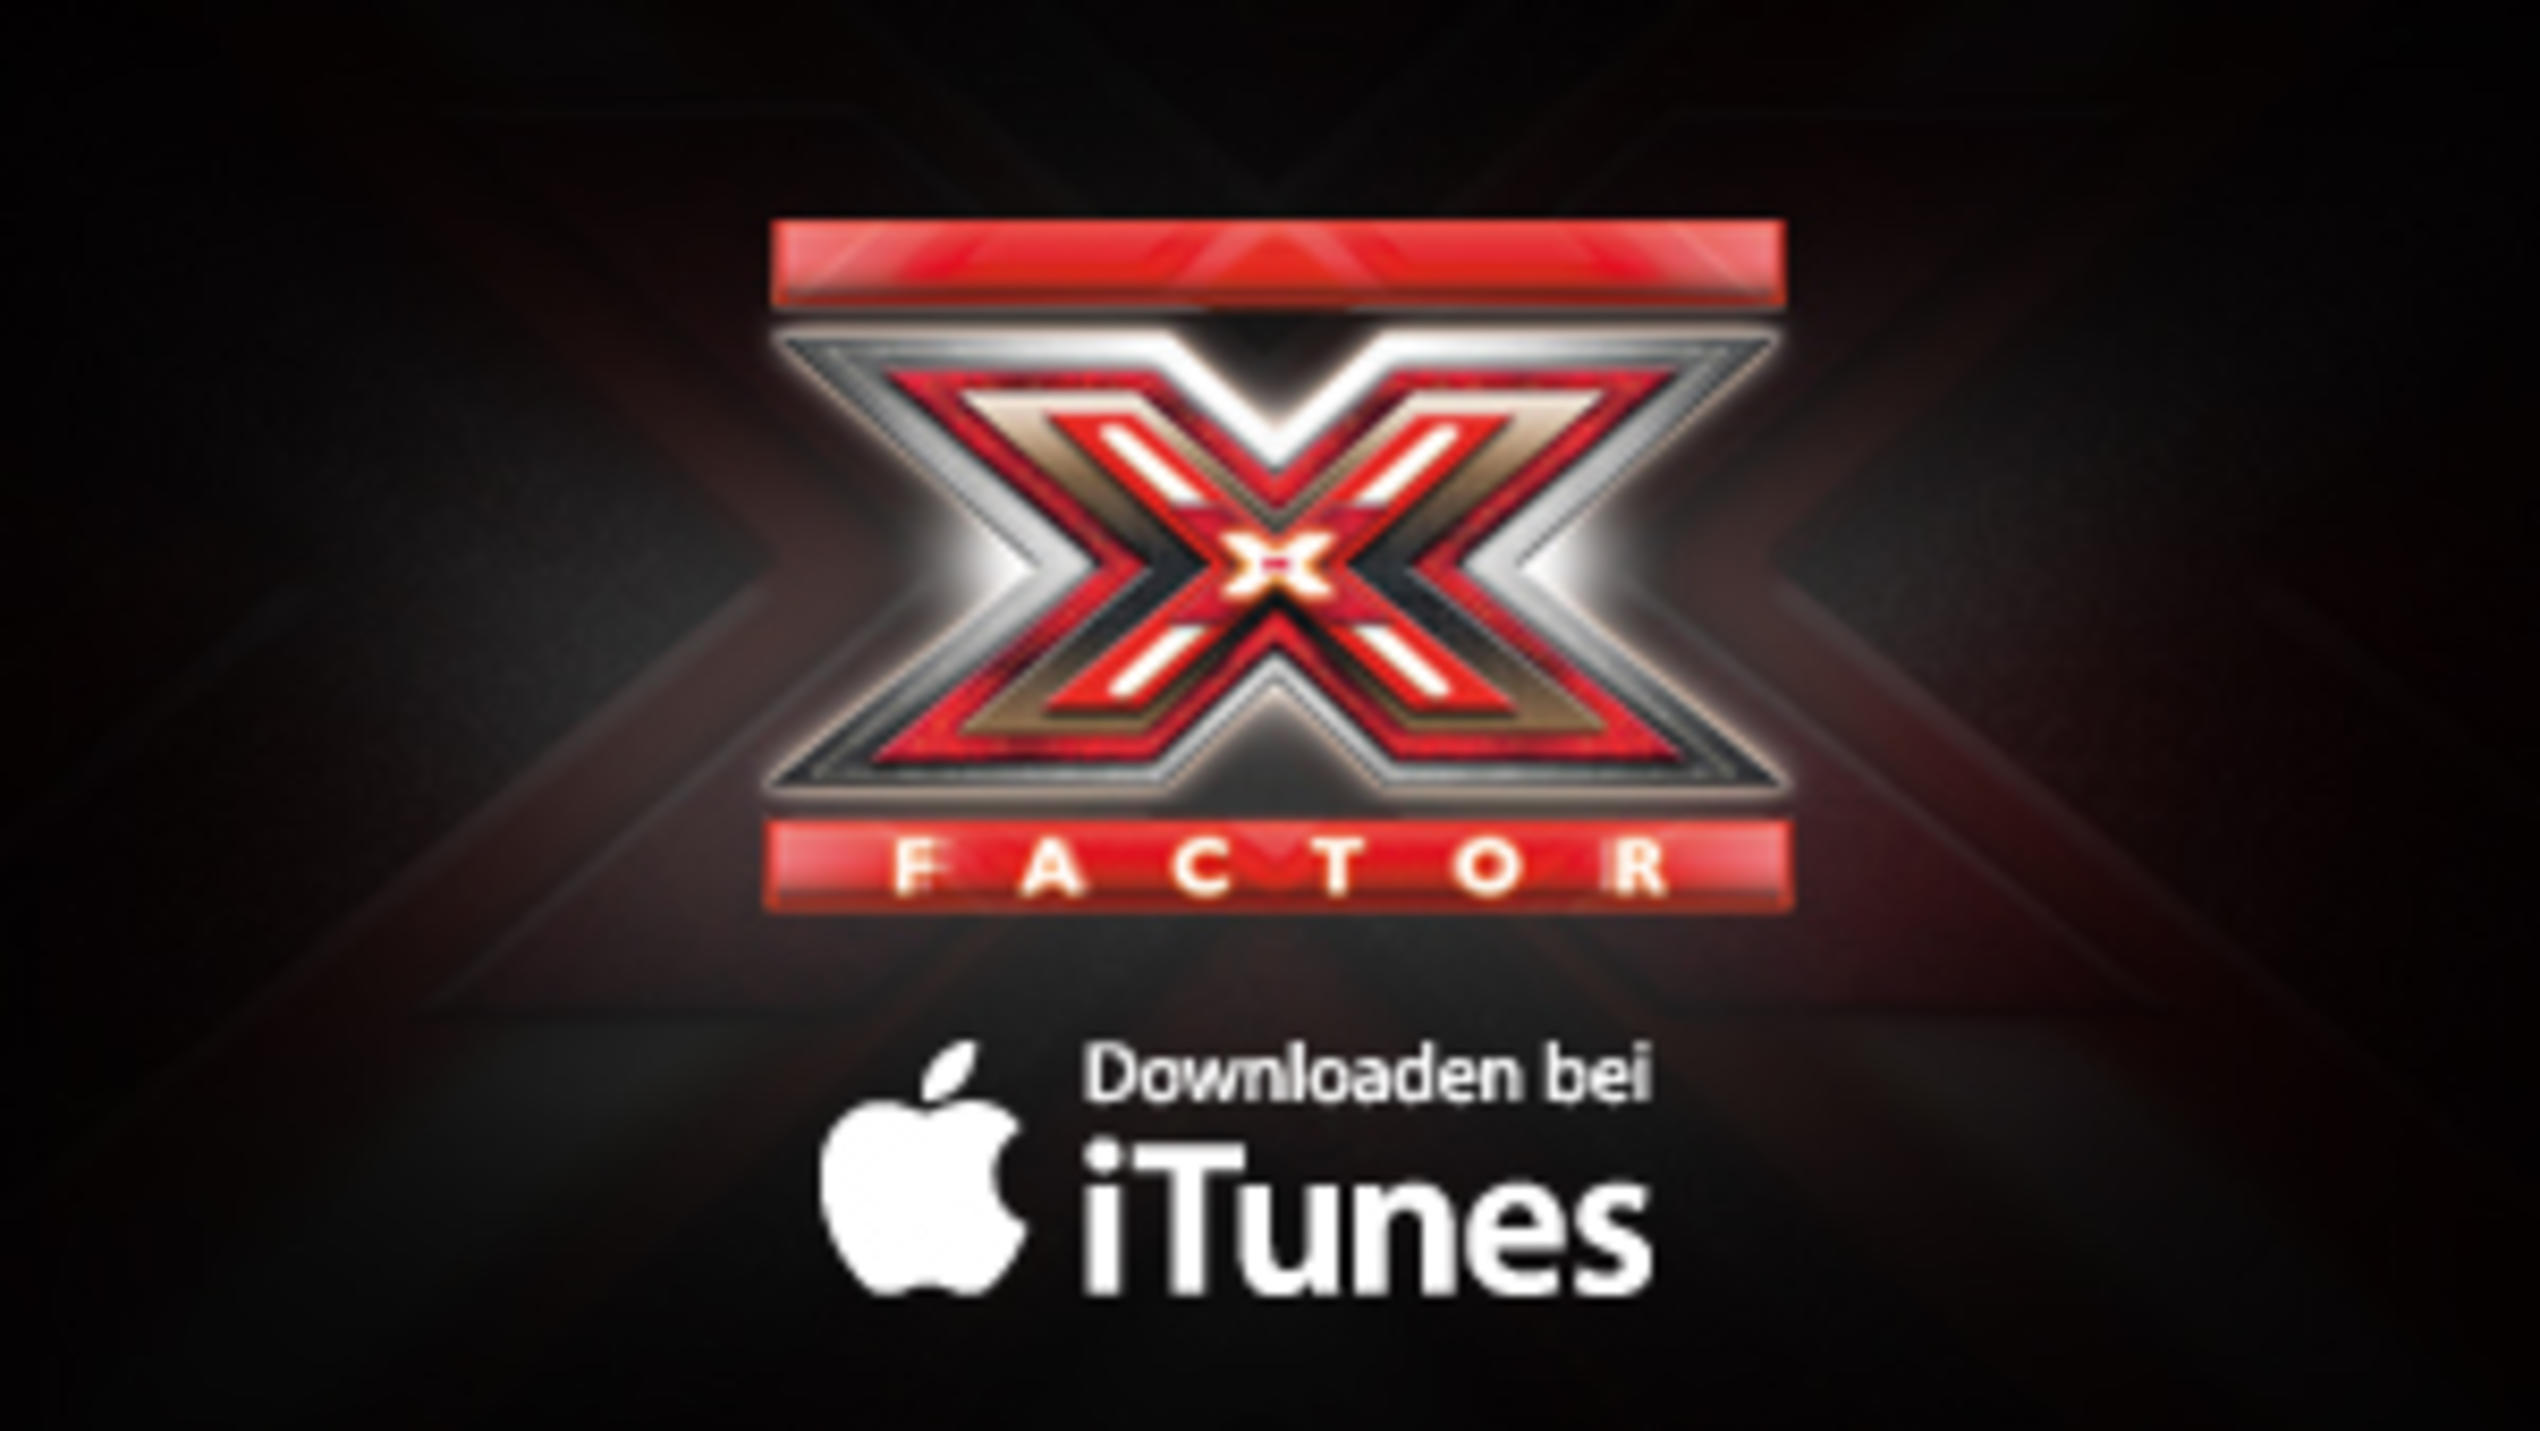 Songdownload der X Factor-Songs